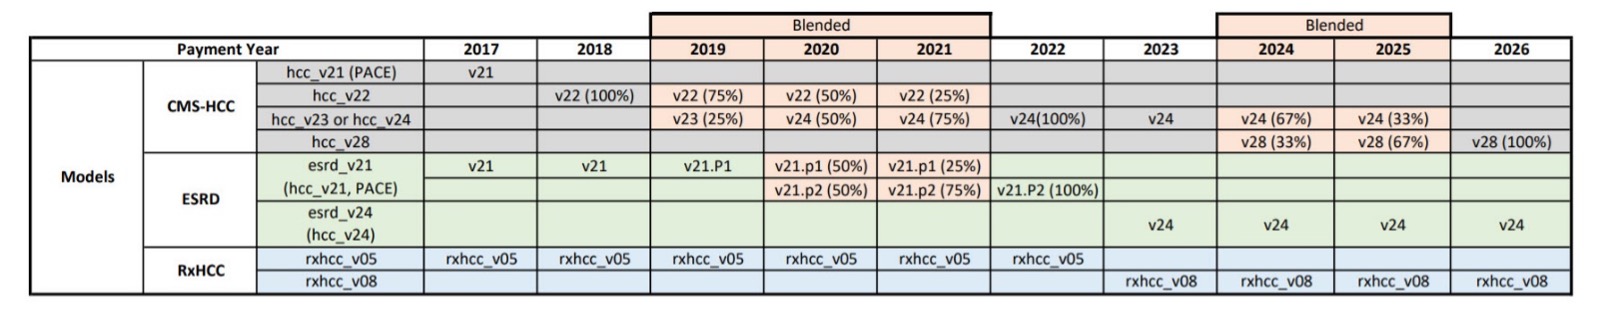 CMS-HCC, ESRD, and RxHCC updates between 2017-2026